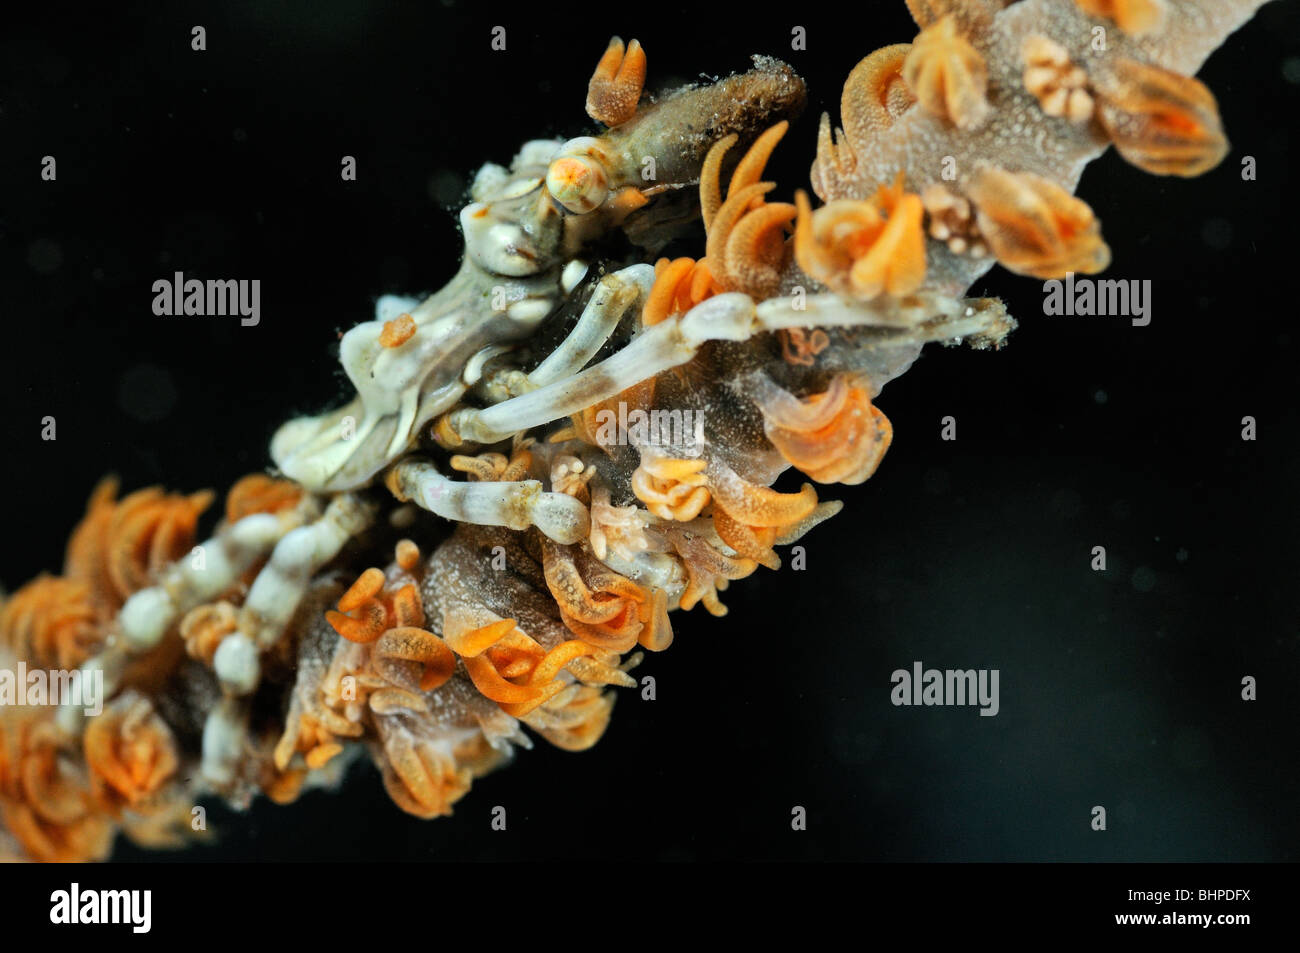 Xenocarcinus tuberculatus, Xeno-Crab, Xeno crab, Whip Coral Spider Crab on Black coral, Alam Batu, Sim City, Bali Stock Photo